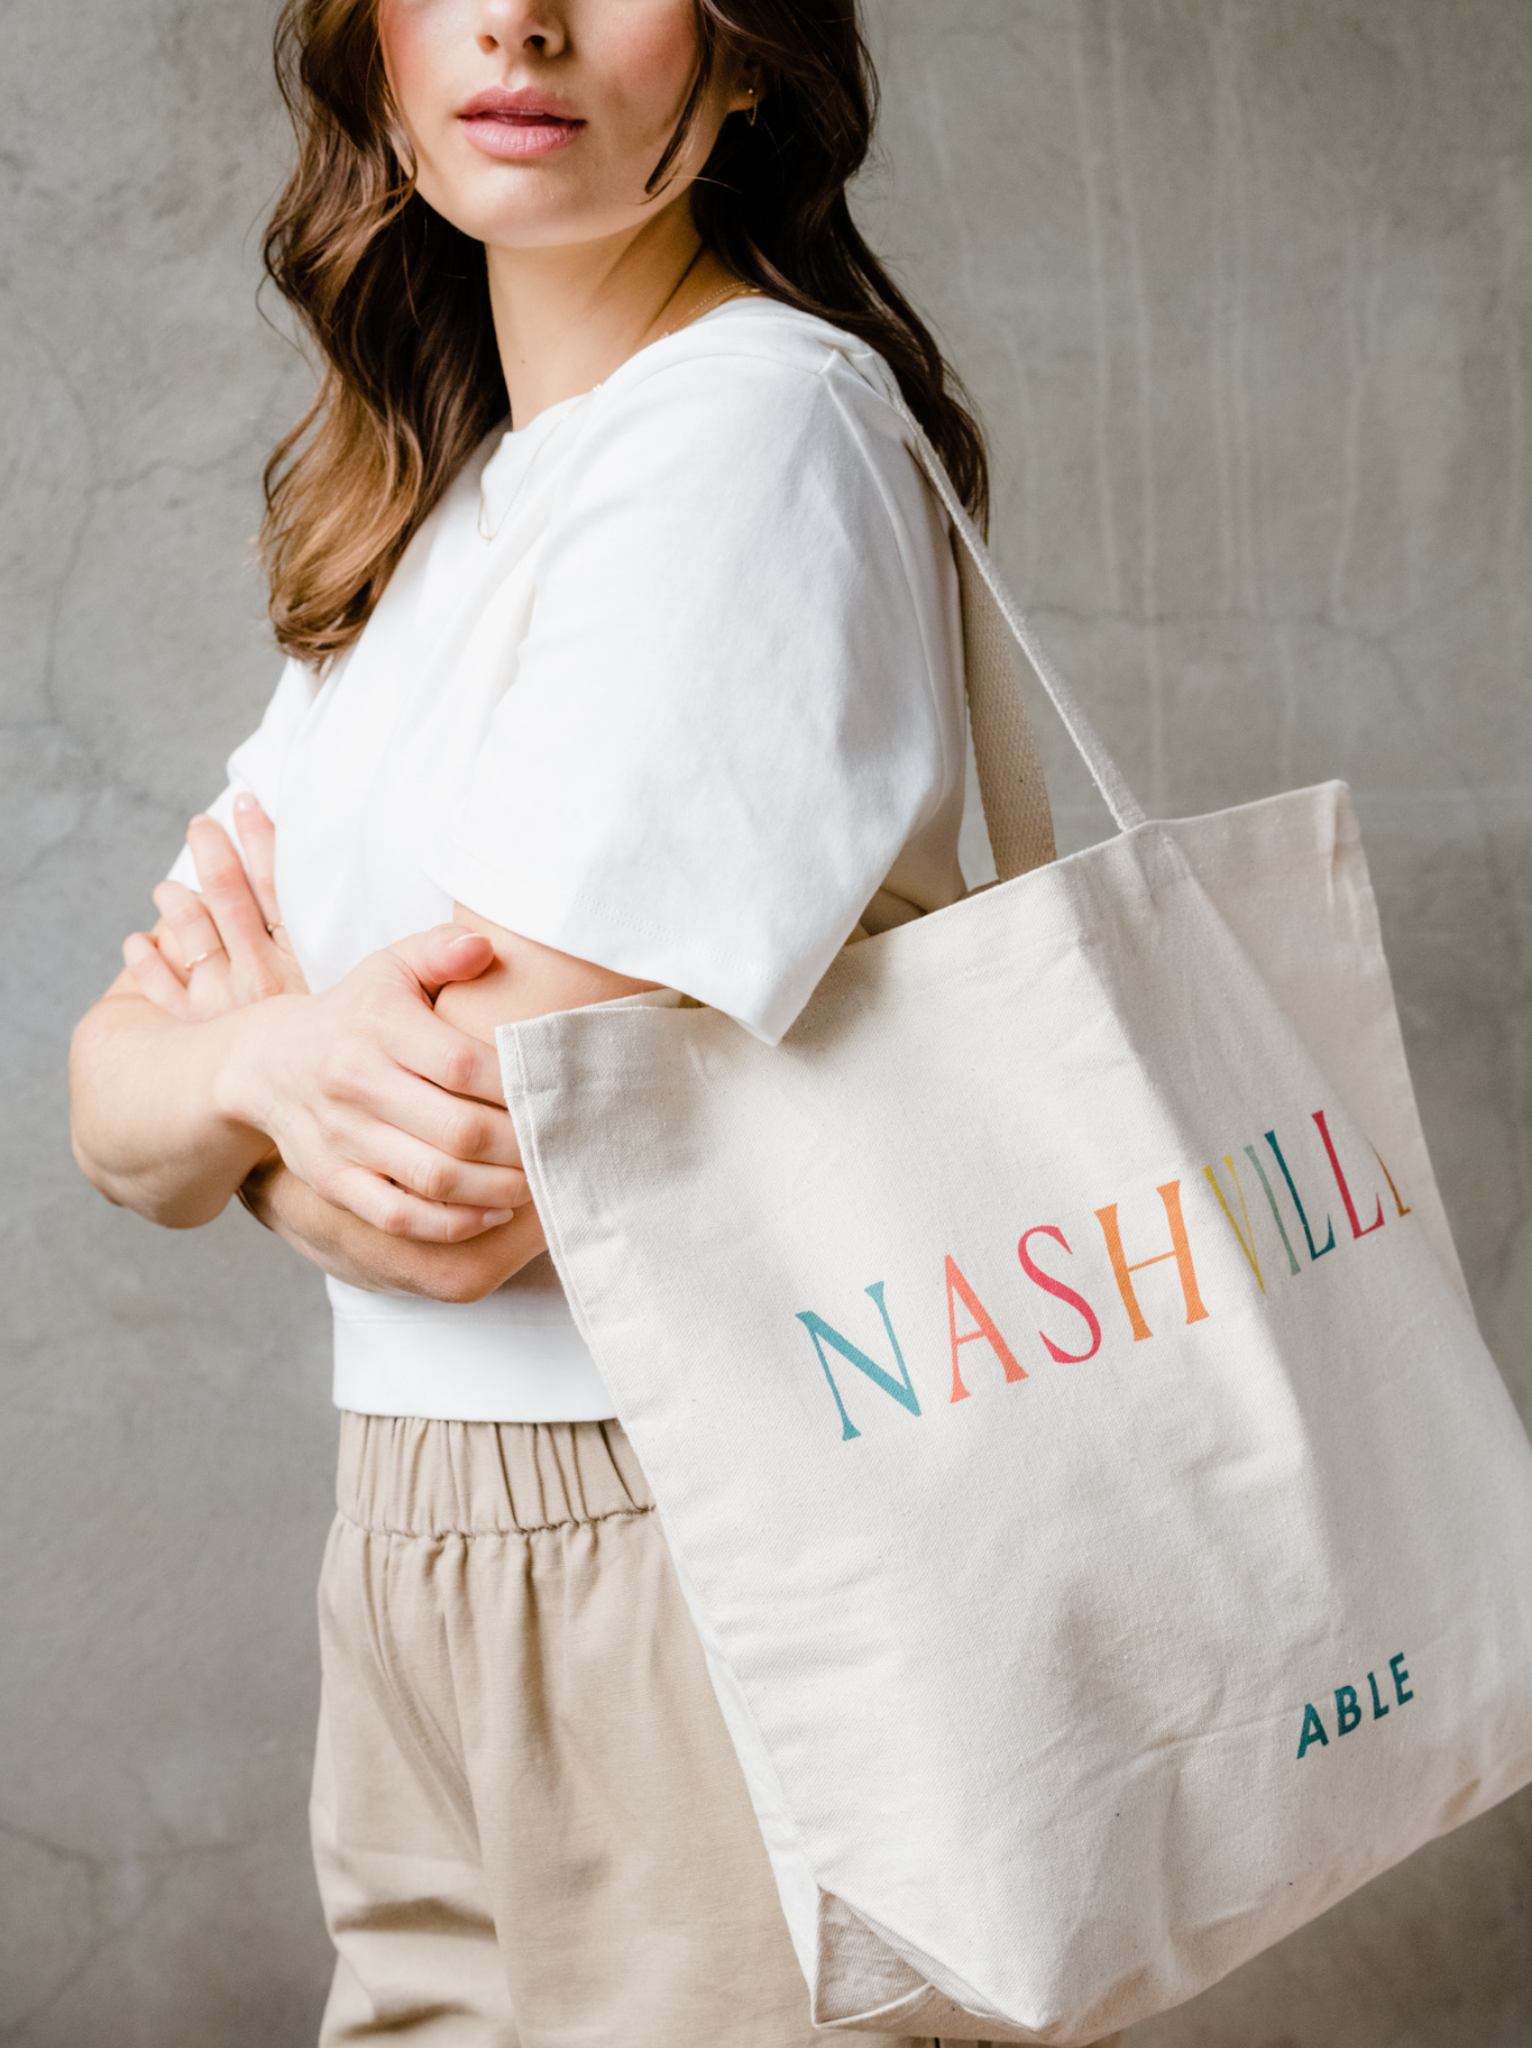 Nashville Drawstring bag (Tennessee) - MUSEQCITY